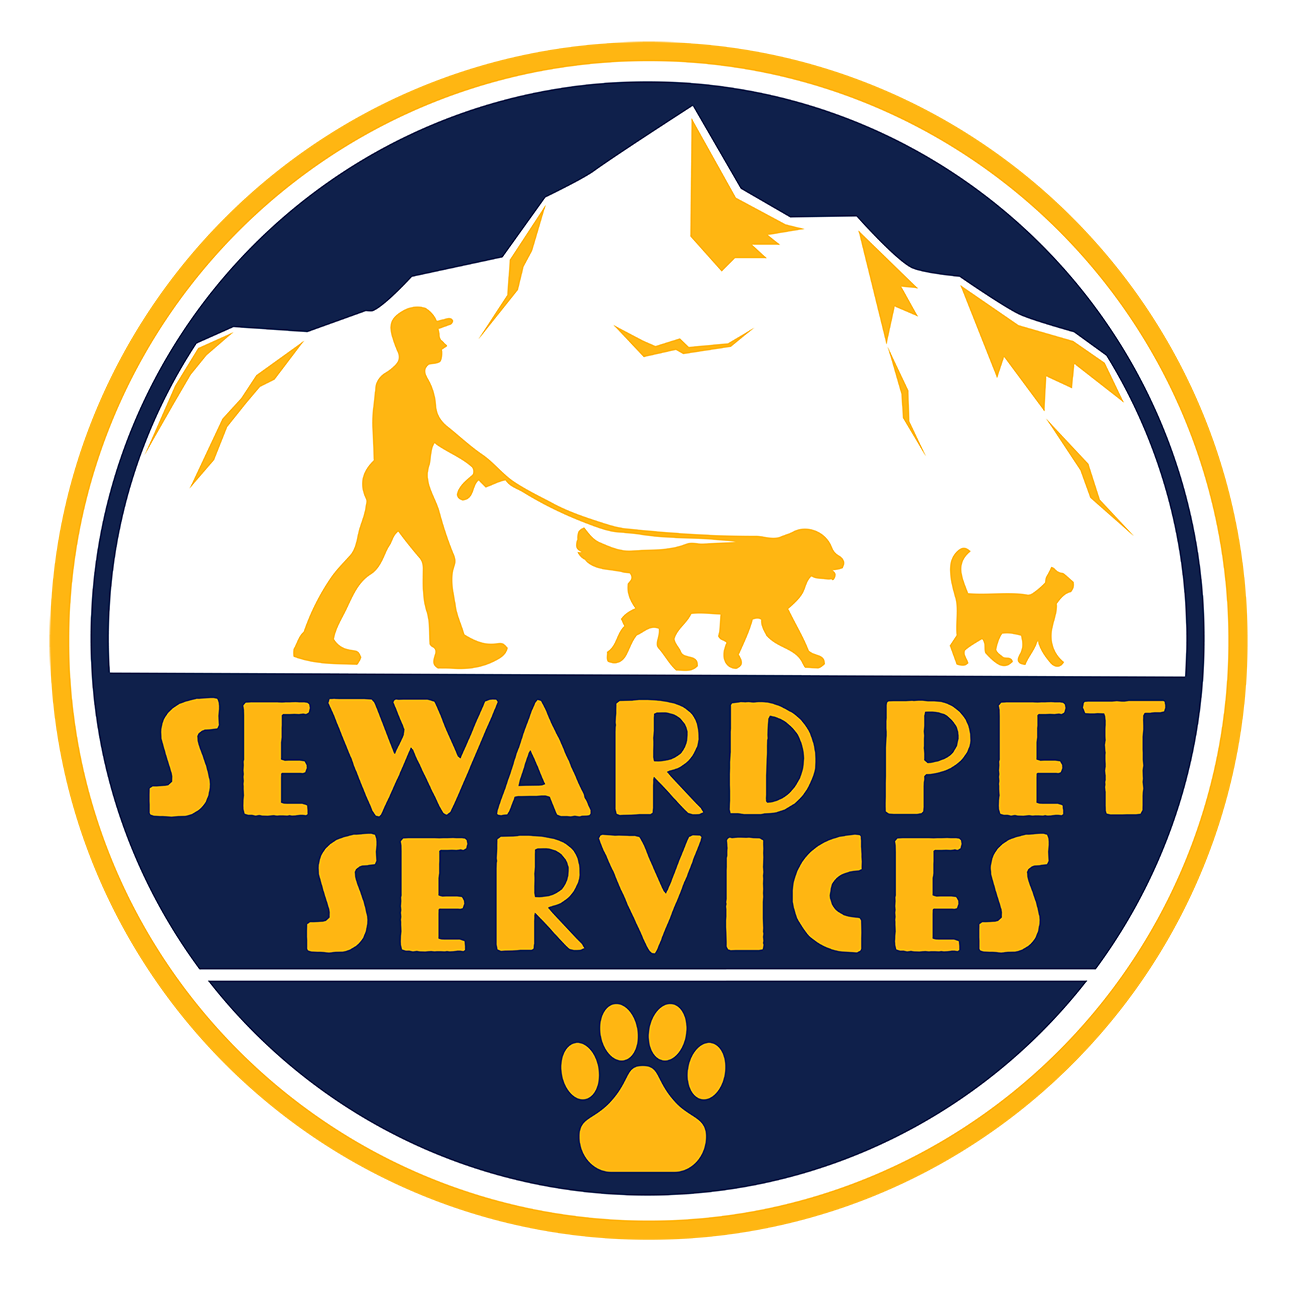 Seward Pet Services